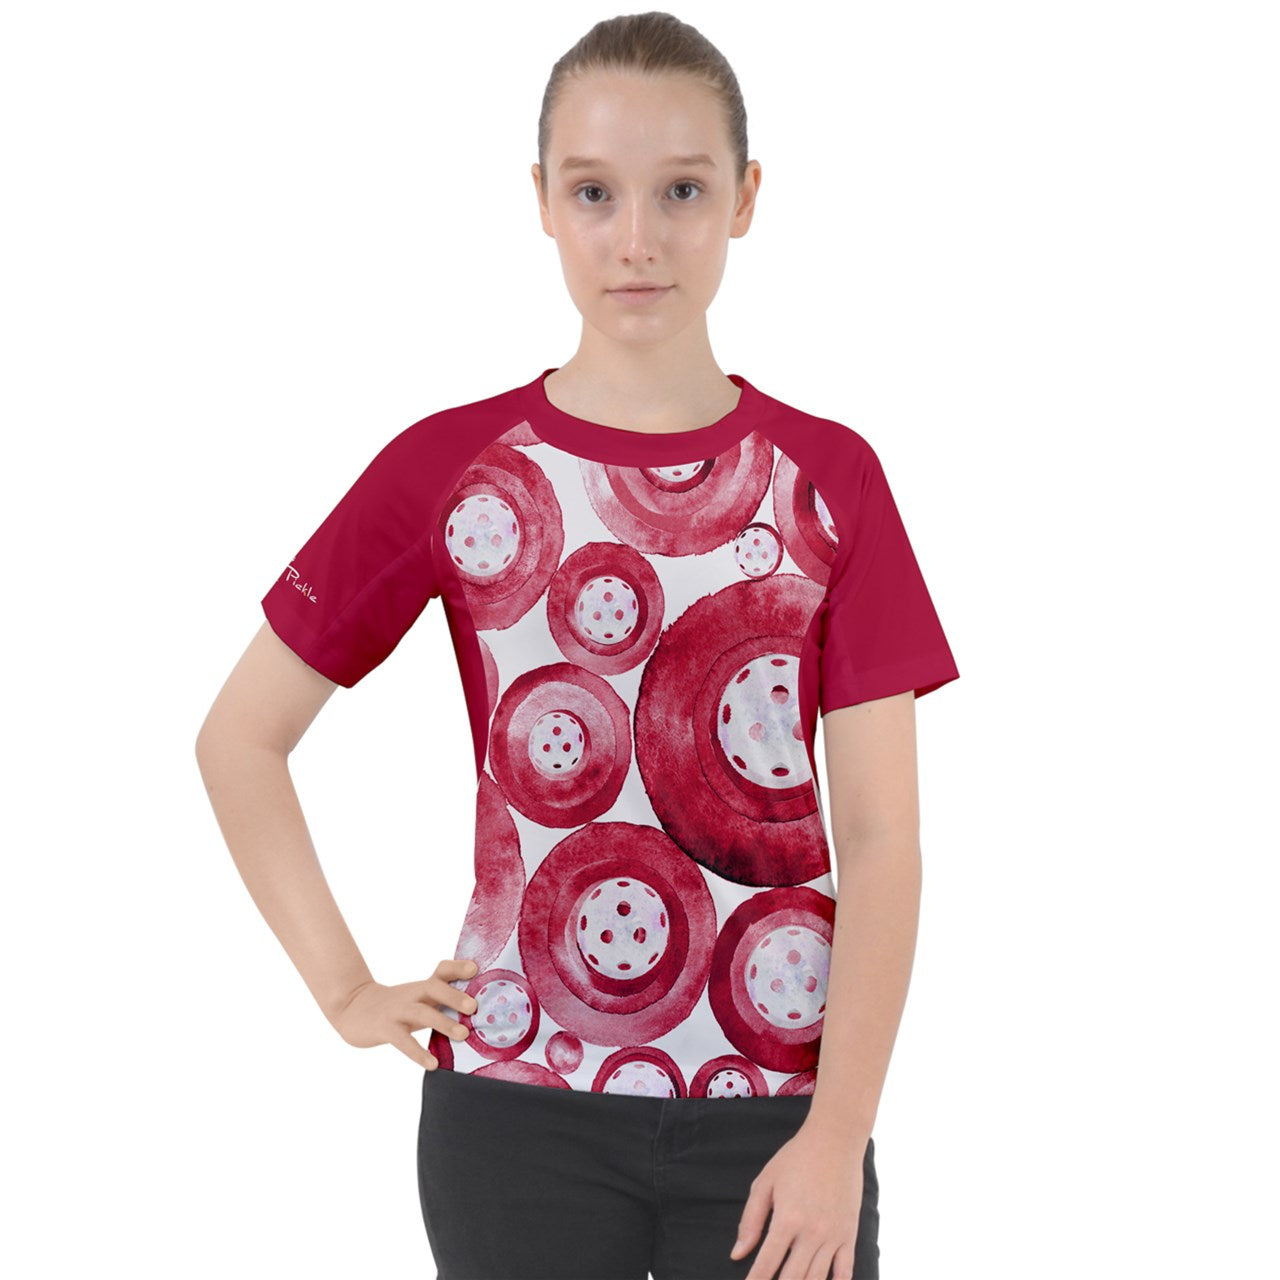 Heidi - RW - Women's Pickleball Sport Raglan T-shirt by Dizzy Pickle